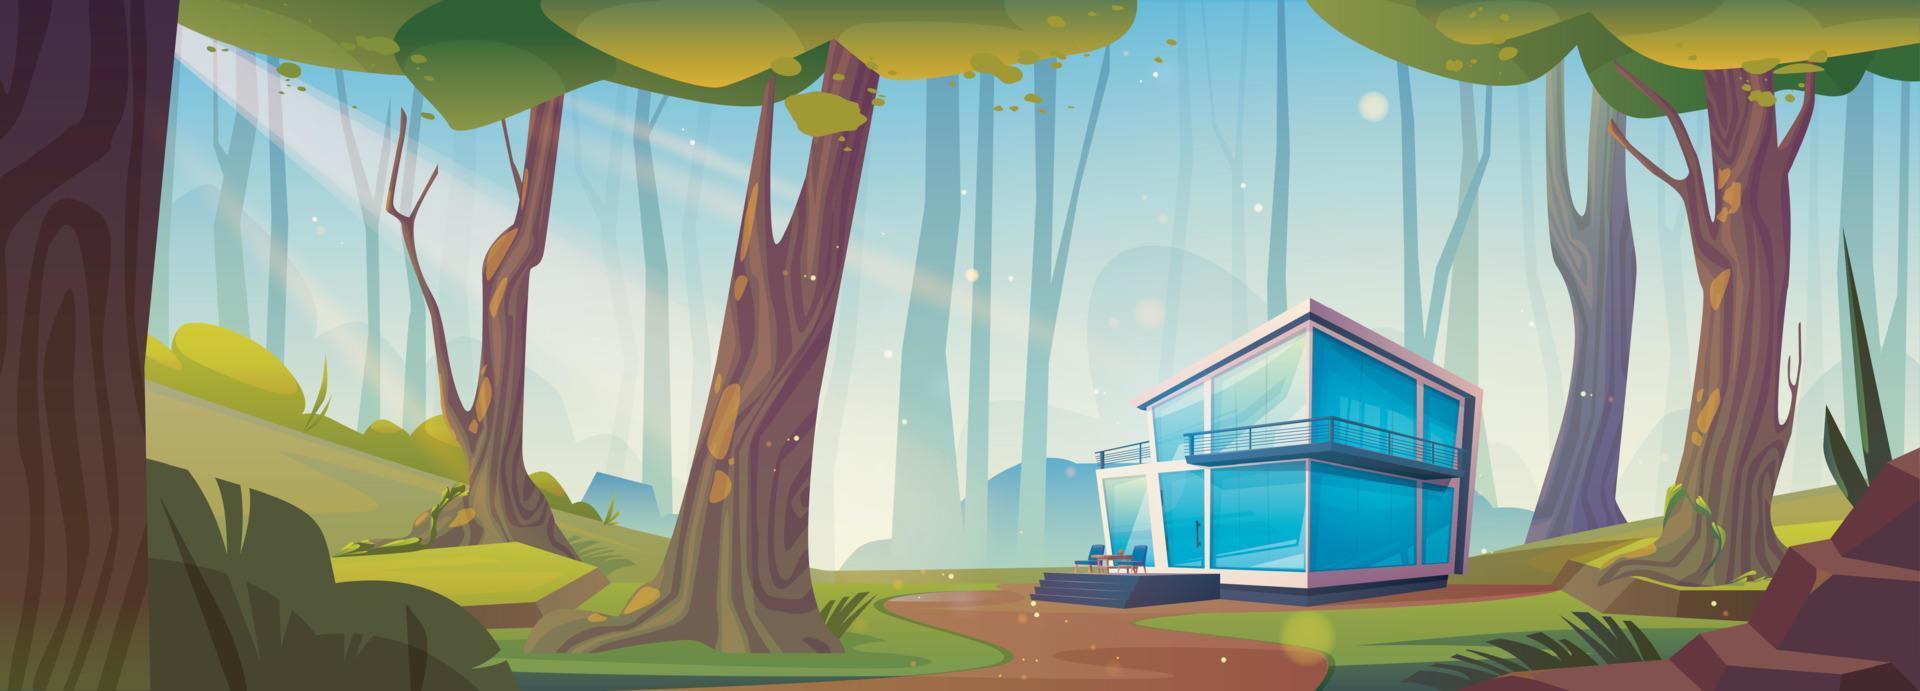 vaso casa en bosque, bosque dibujos animados paisaje vector